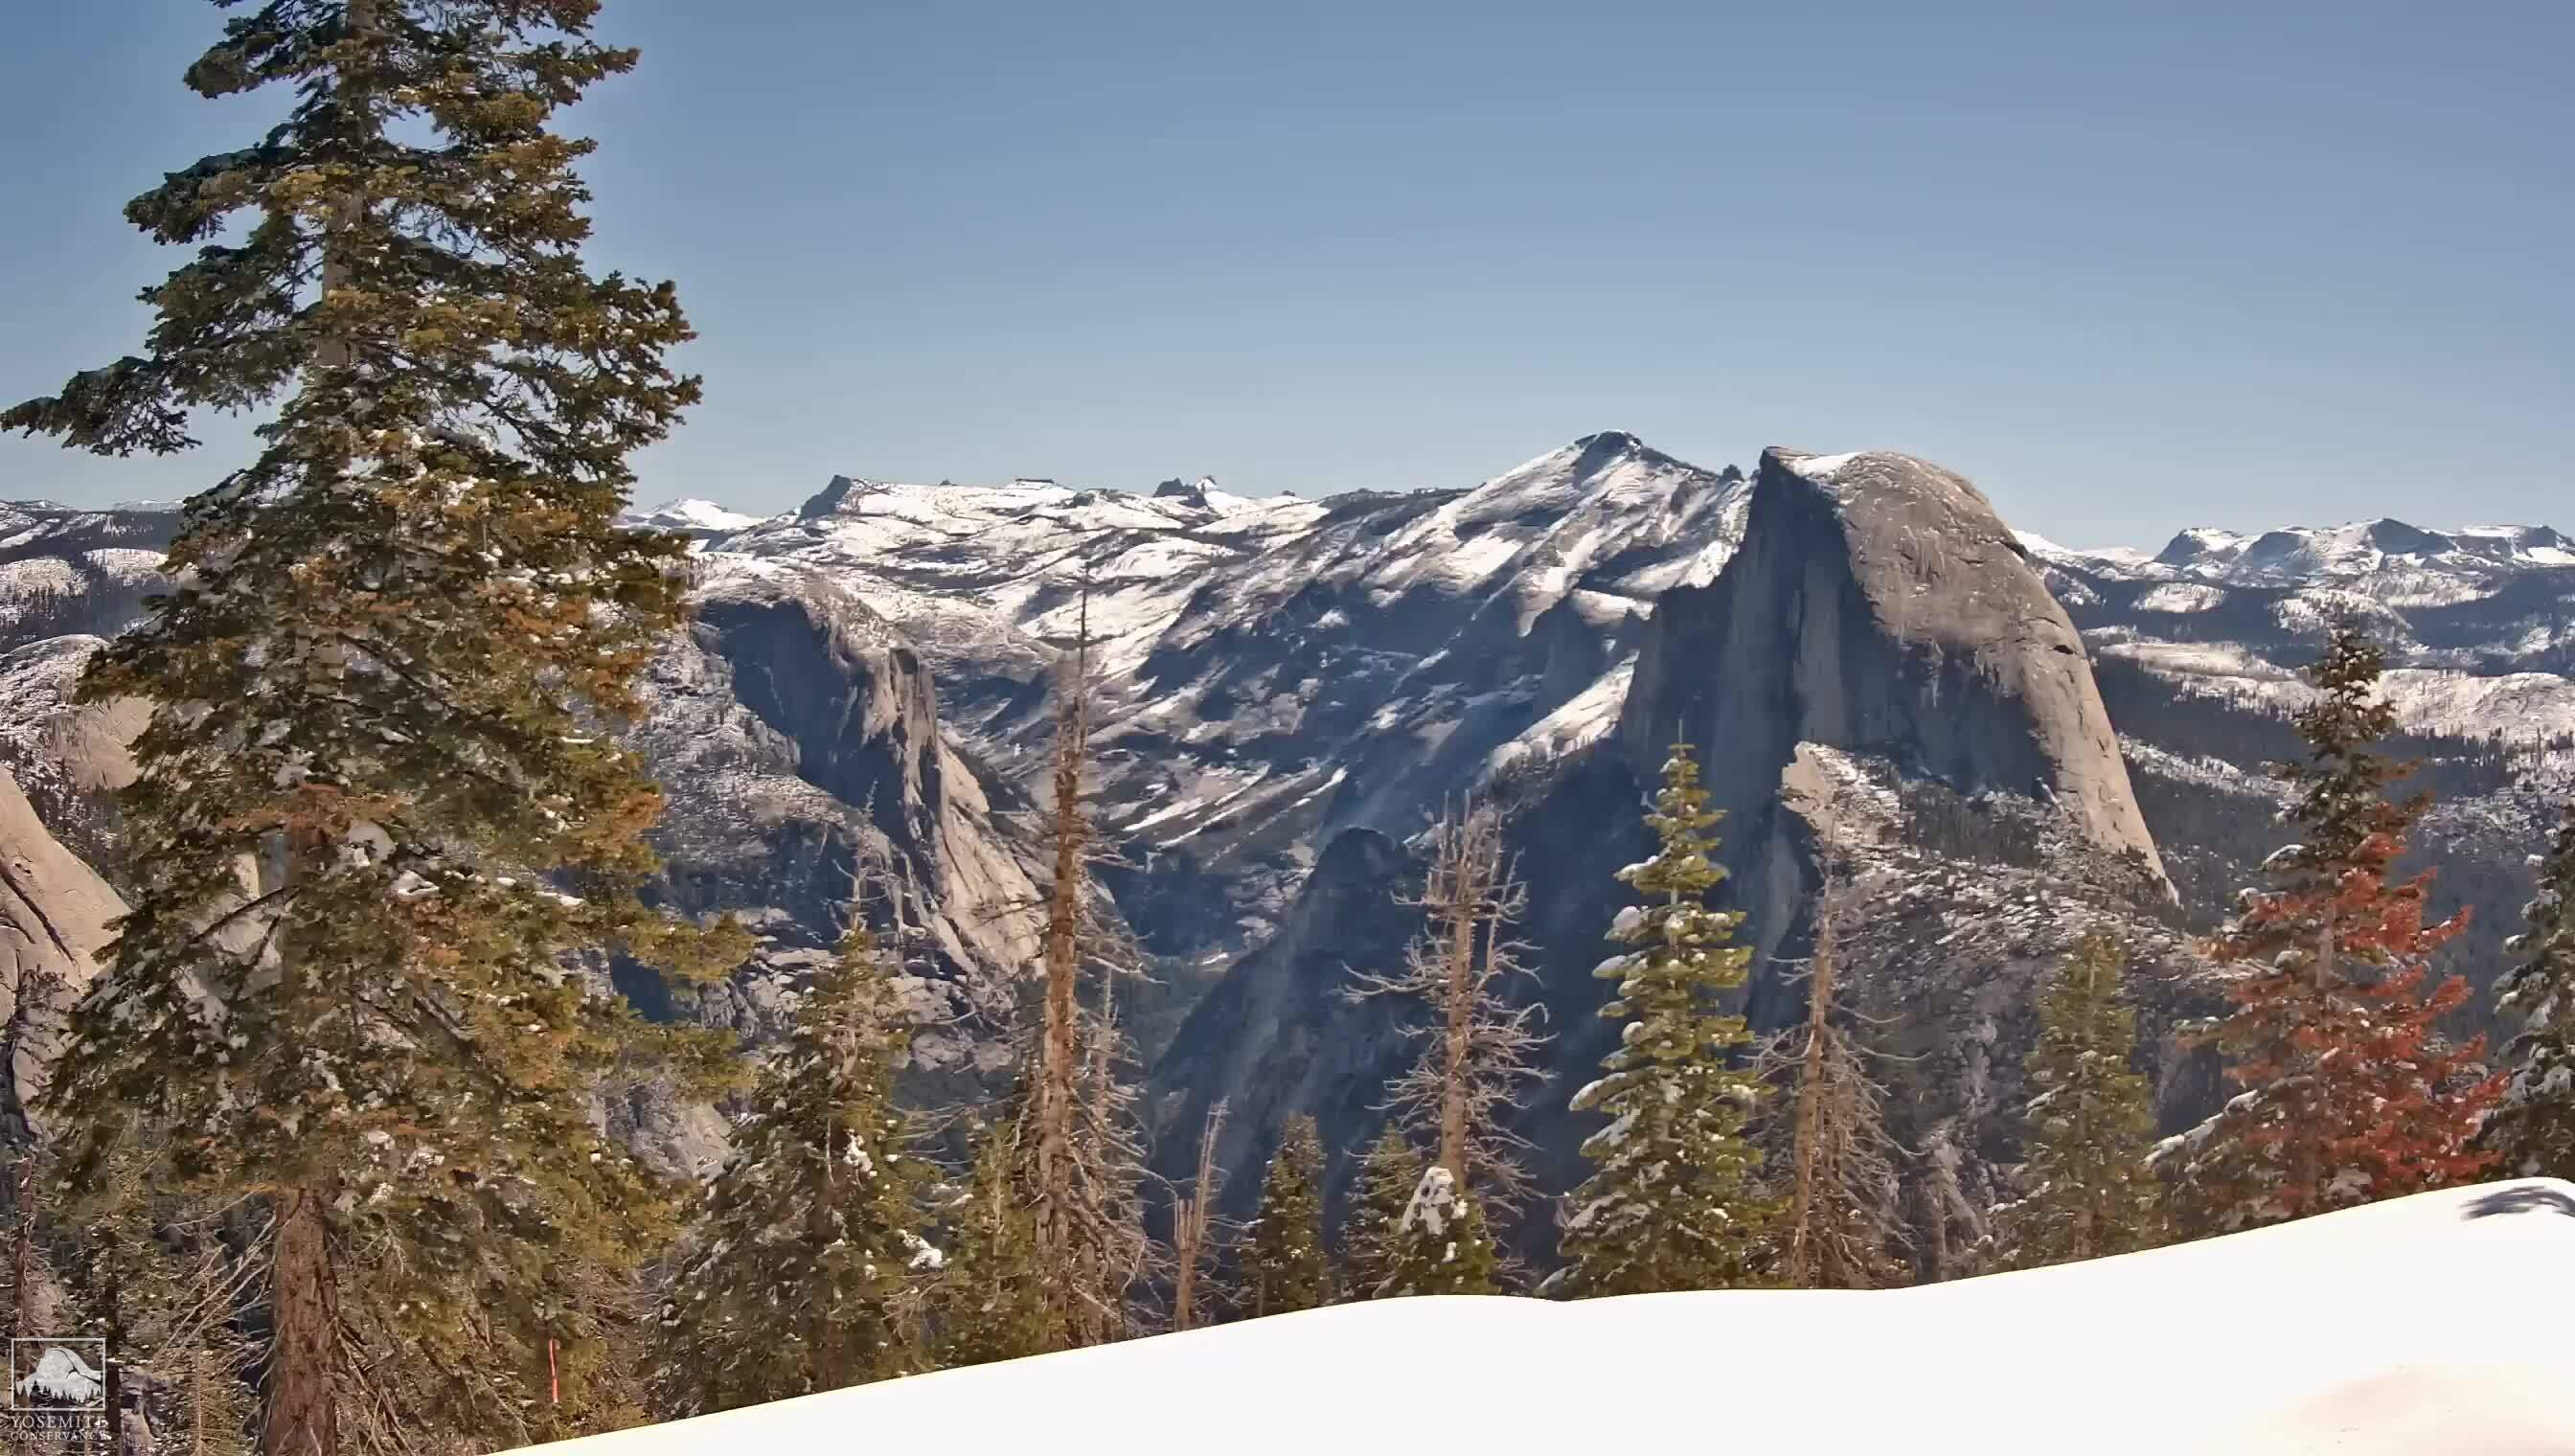 Yosemite High Sierra preview image